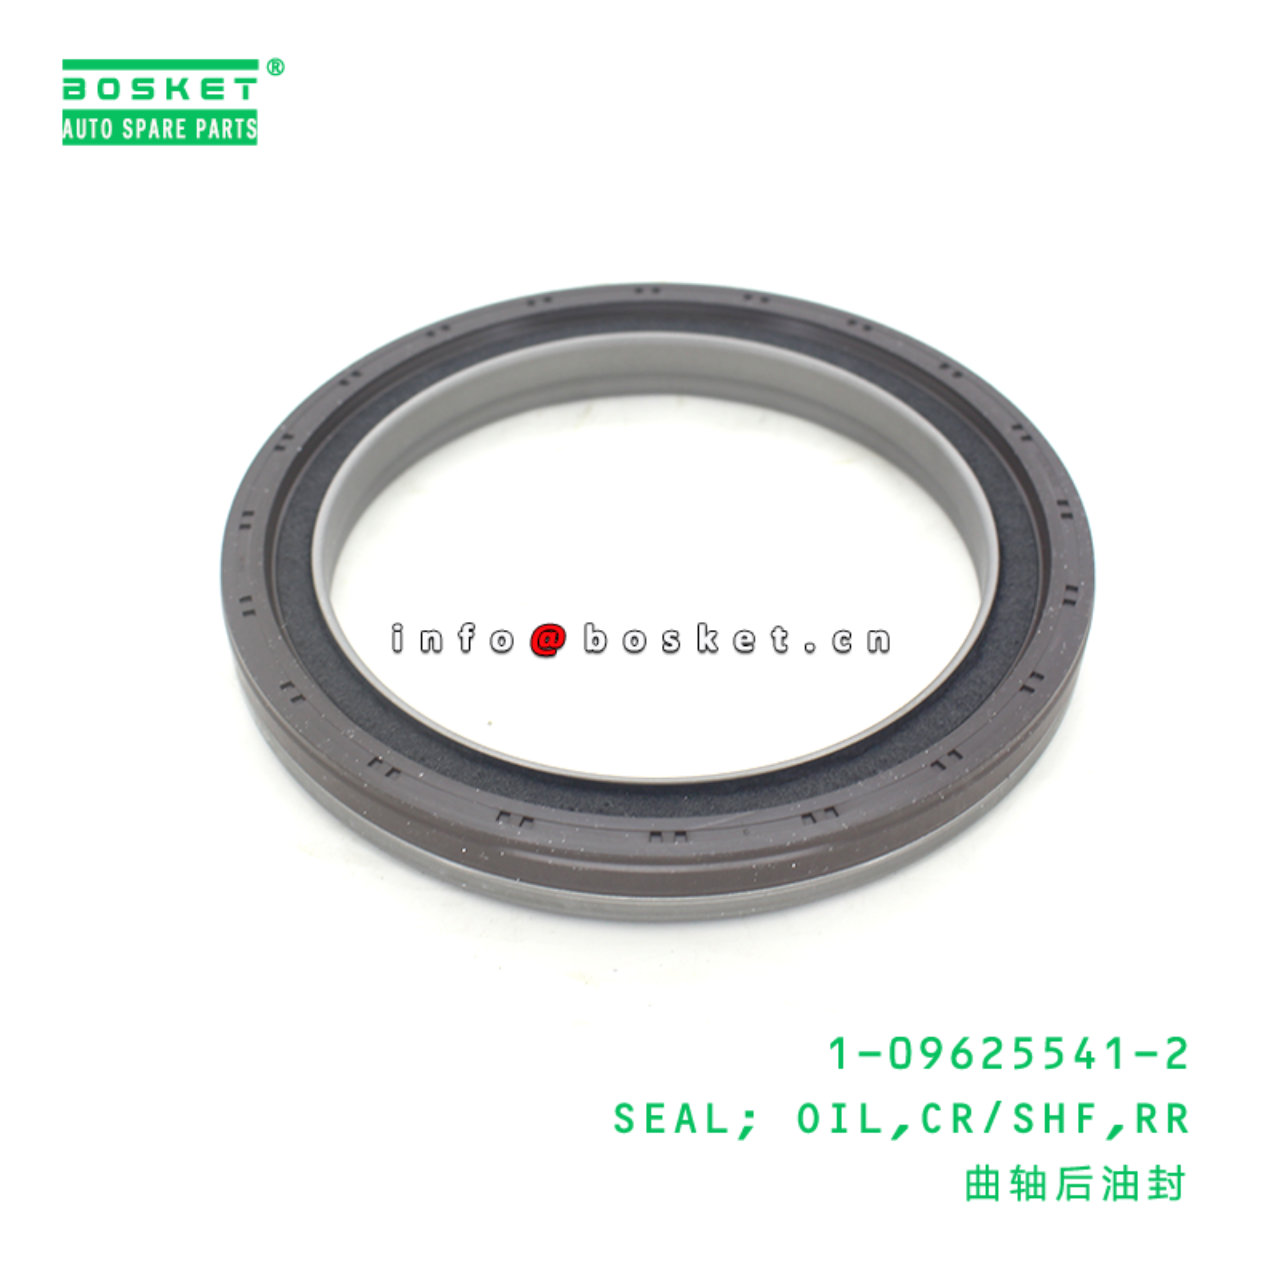  1-09625541-2 Rear Camshaft Oil Seal 1096255412 Suitable for ISUZU VC46 6UZ1